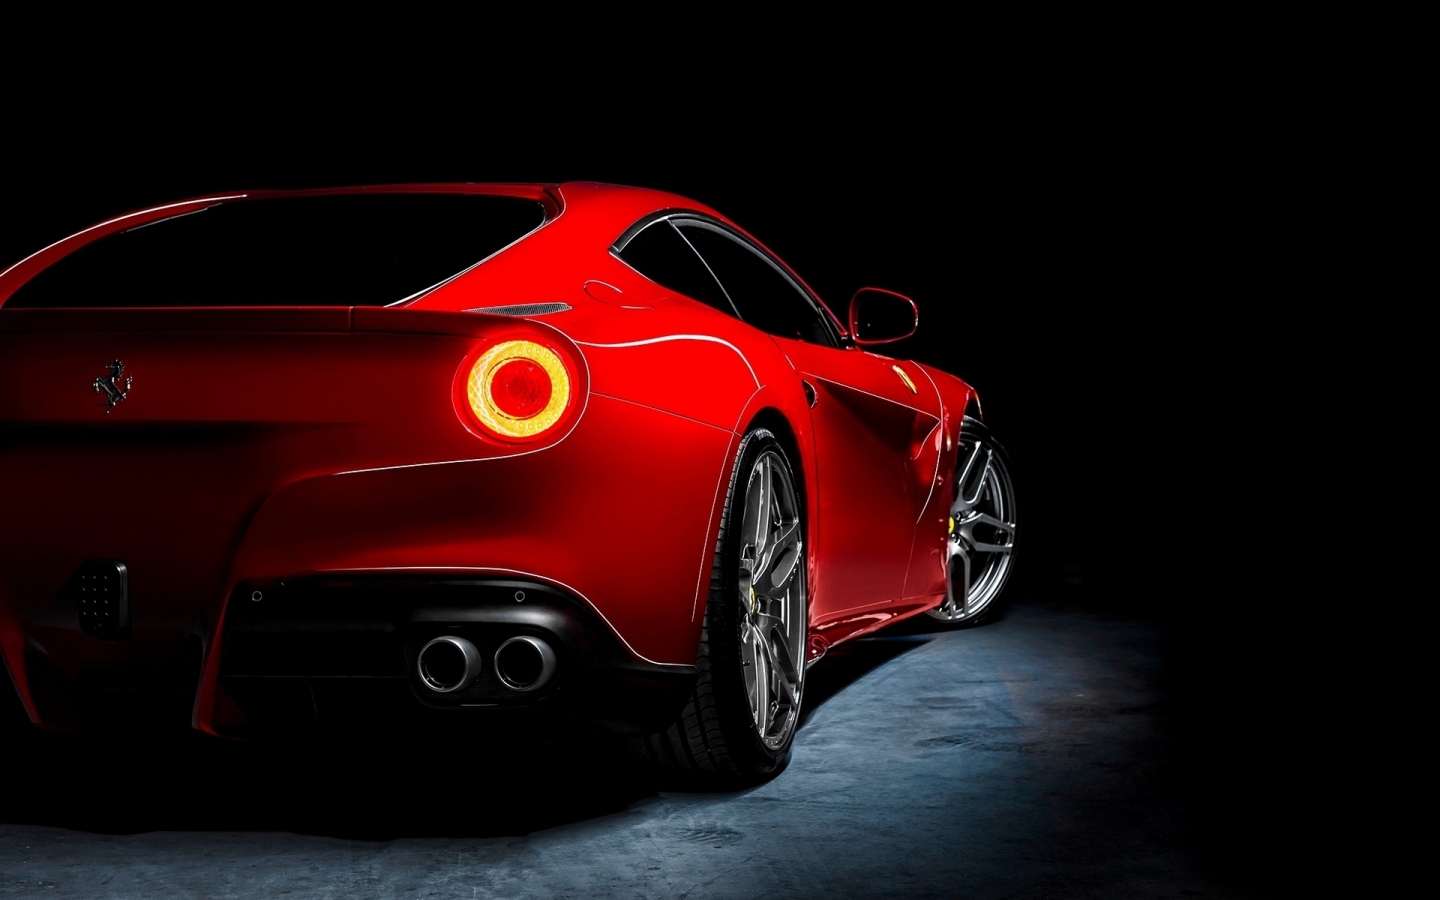 Red Ferrari F12 Berlinetta for 1440 x 900 widescreen resolution